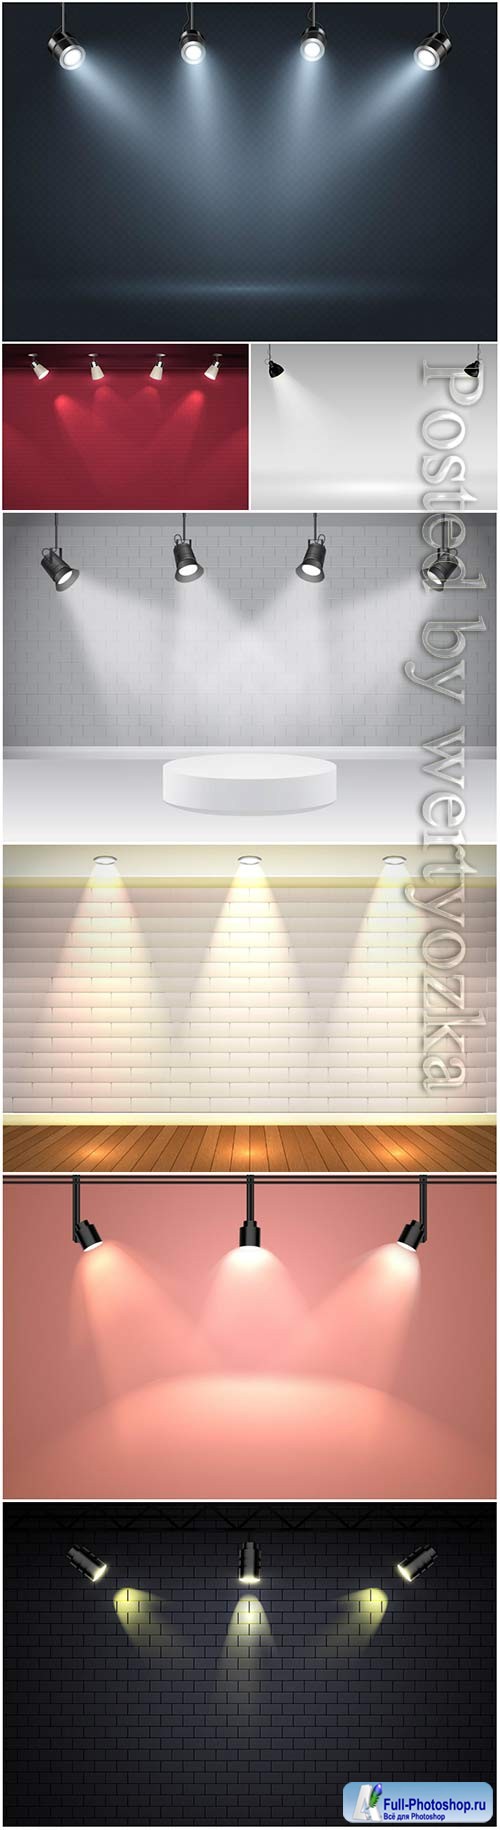 Spot lights background vector illustration